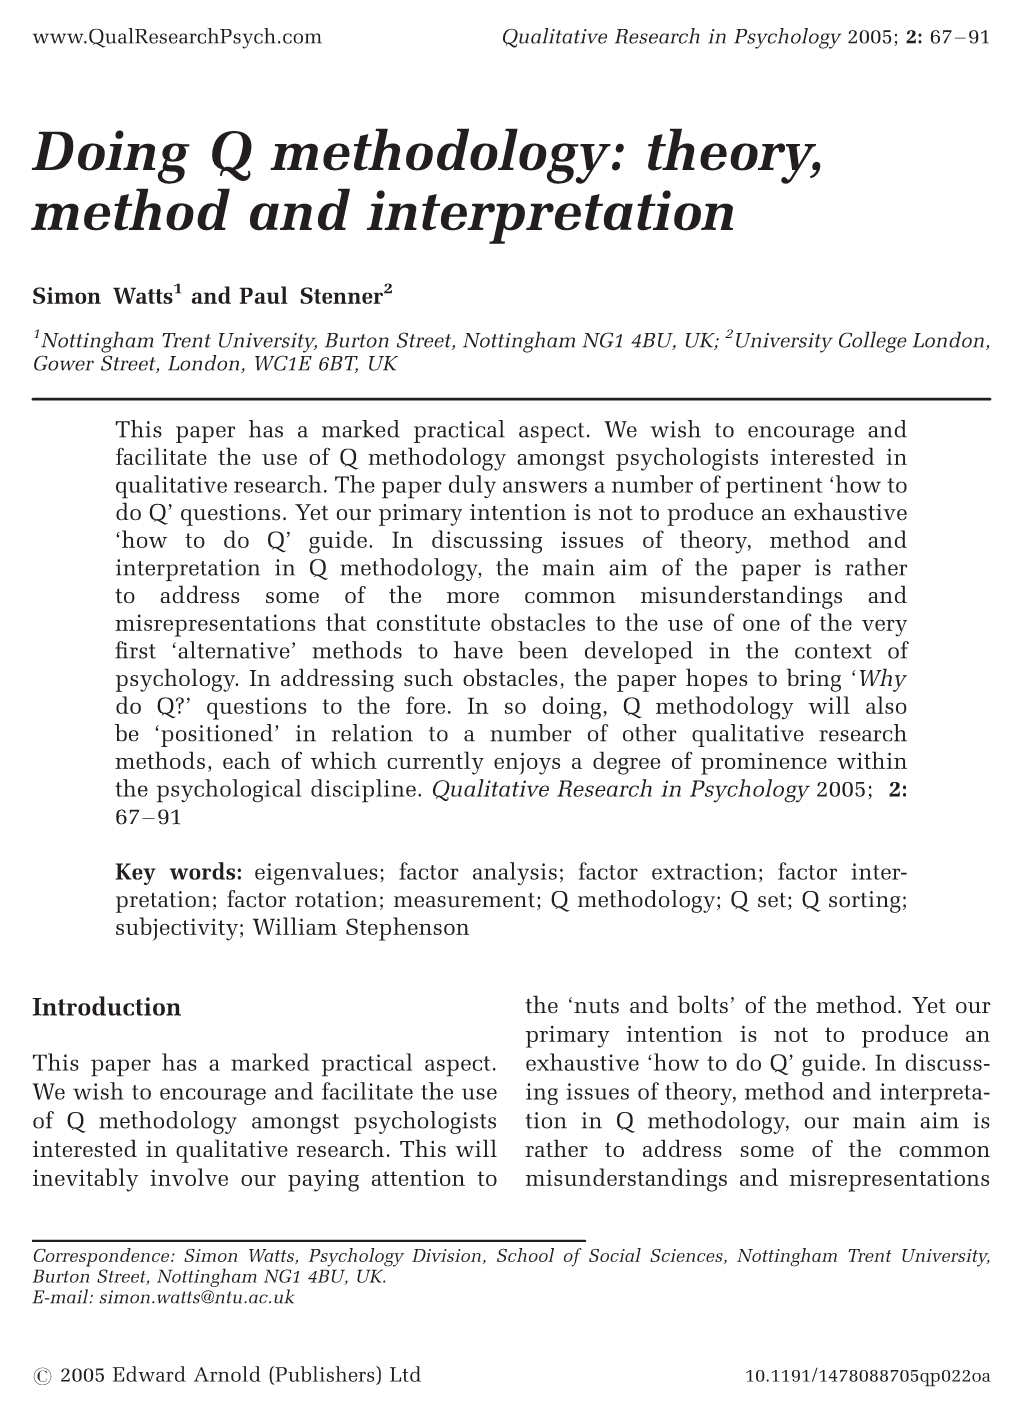 Doing Q Methodology: Theory, Method and Interpretation